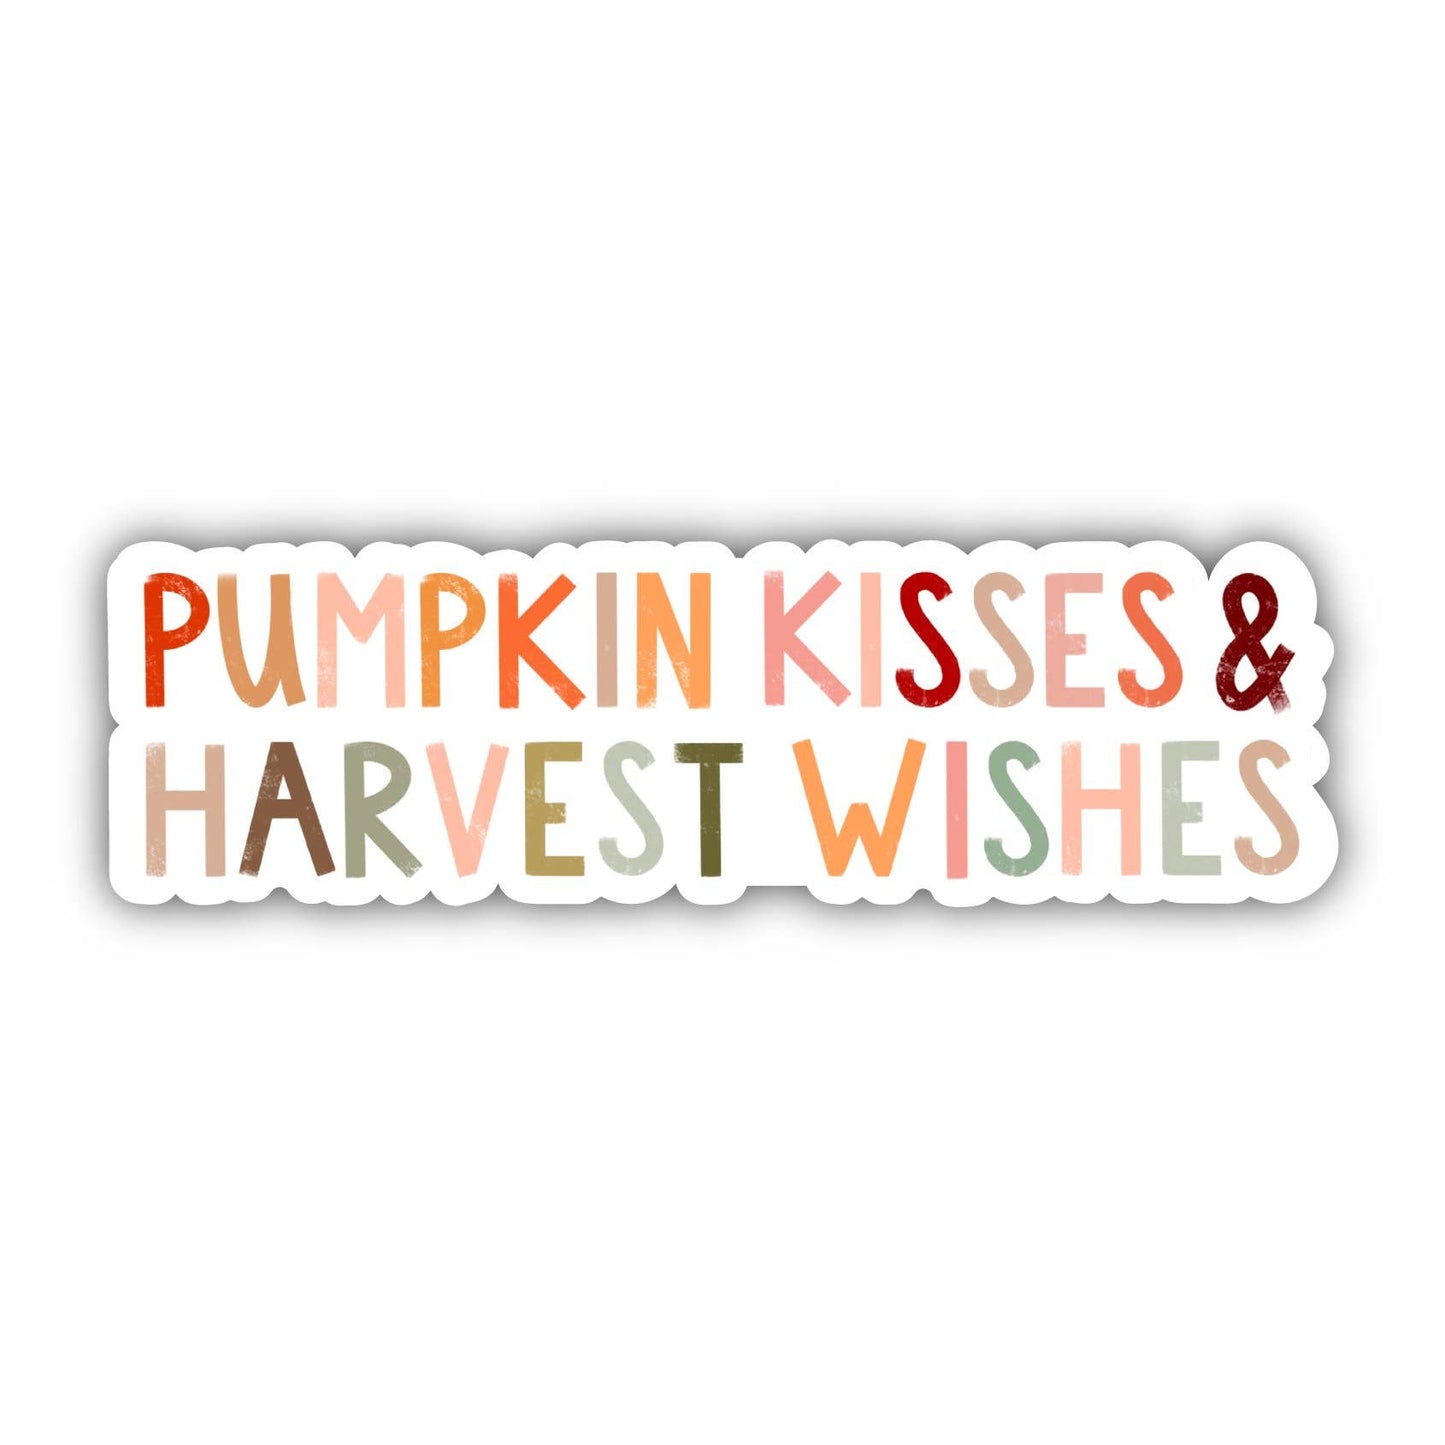 Pumpkin Kisses Harvest Wishes - Multicolor Lettering Sticker